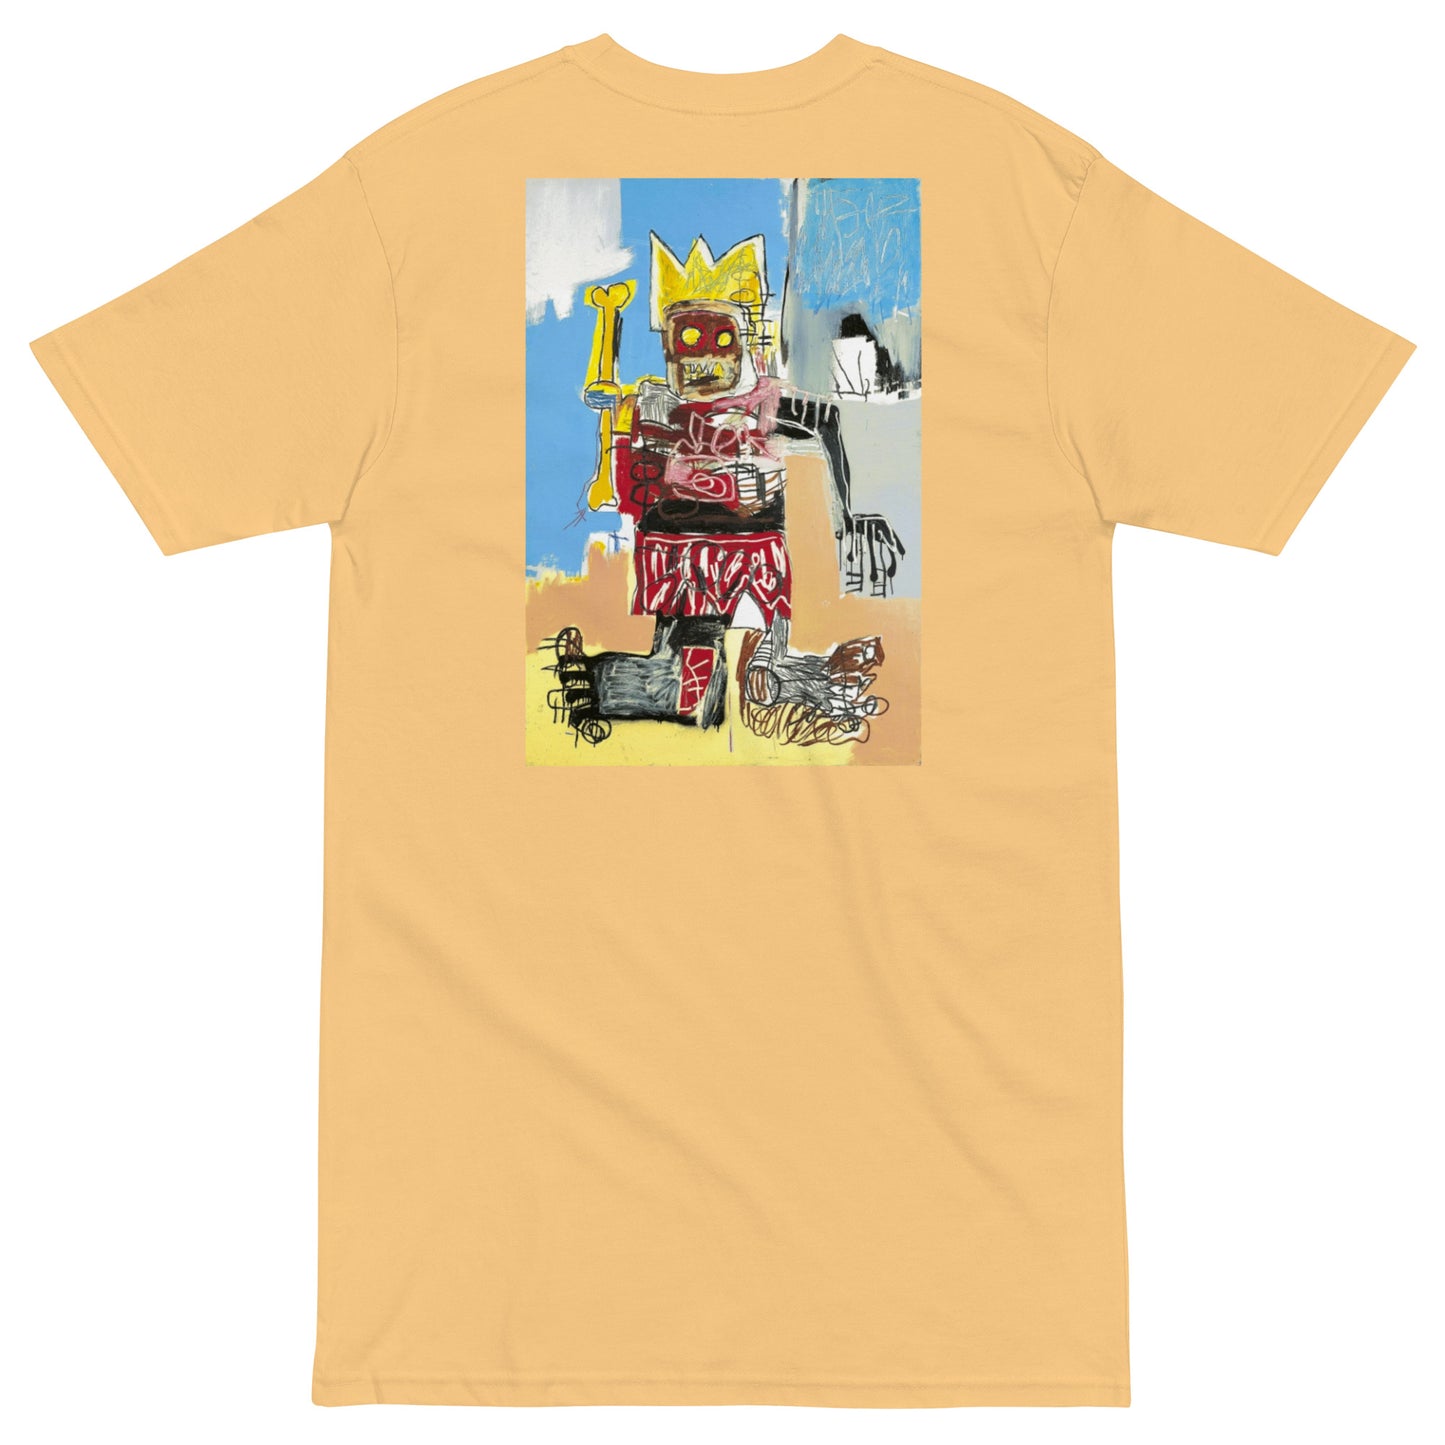 Jean-Michel Basquiat "Untitled" 1982 Artwork Embroidered + Printed Premium Streetwear T-shirt Yellow